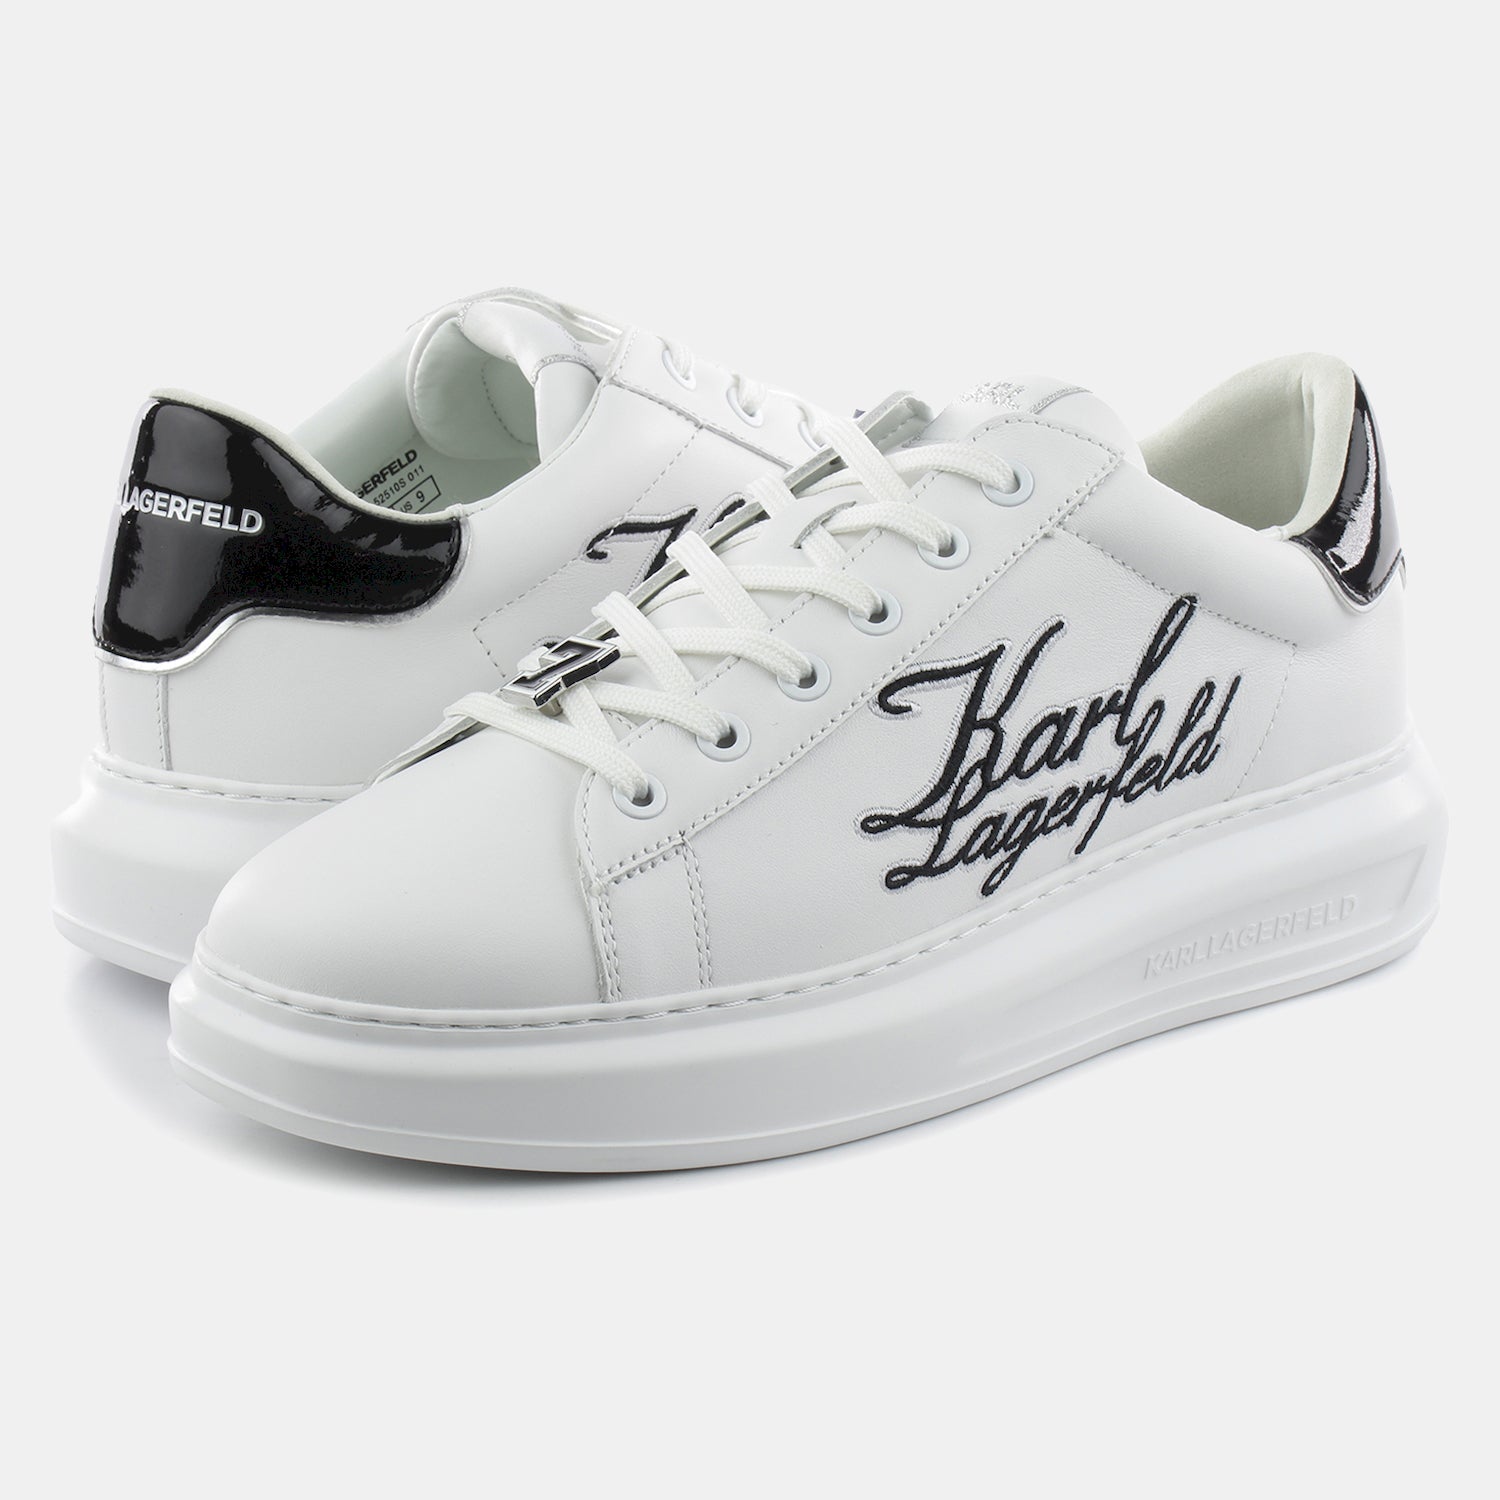 Karl Lagerfeld Sapatilhas Sneakers Shoes Kl52510s White Branco_shot5